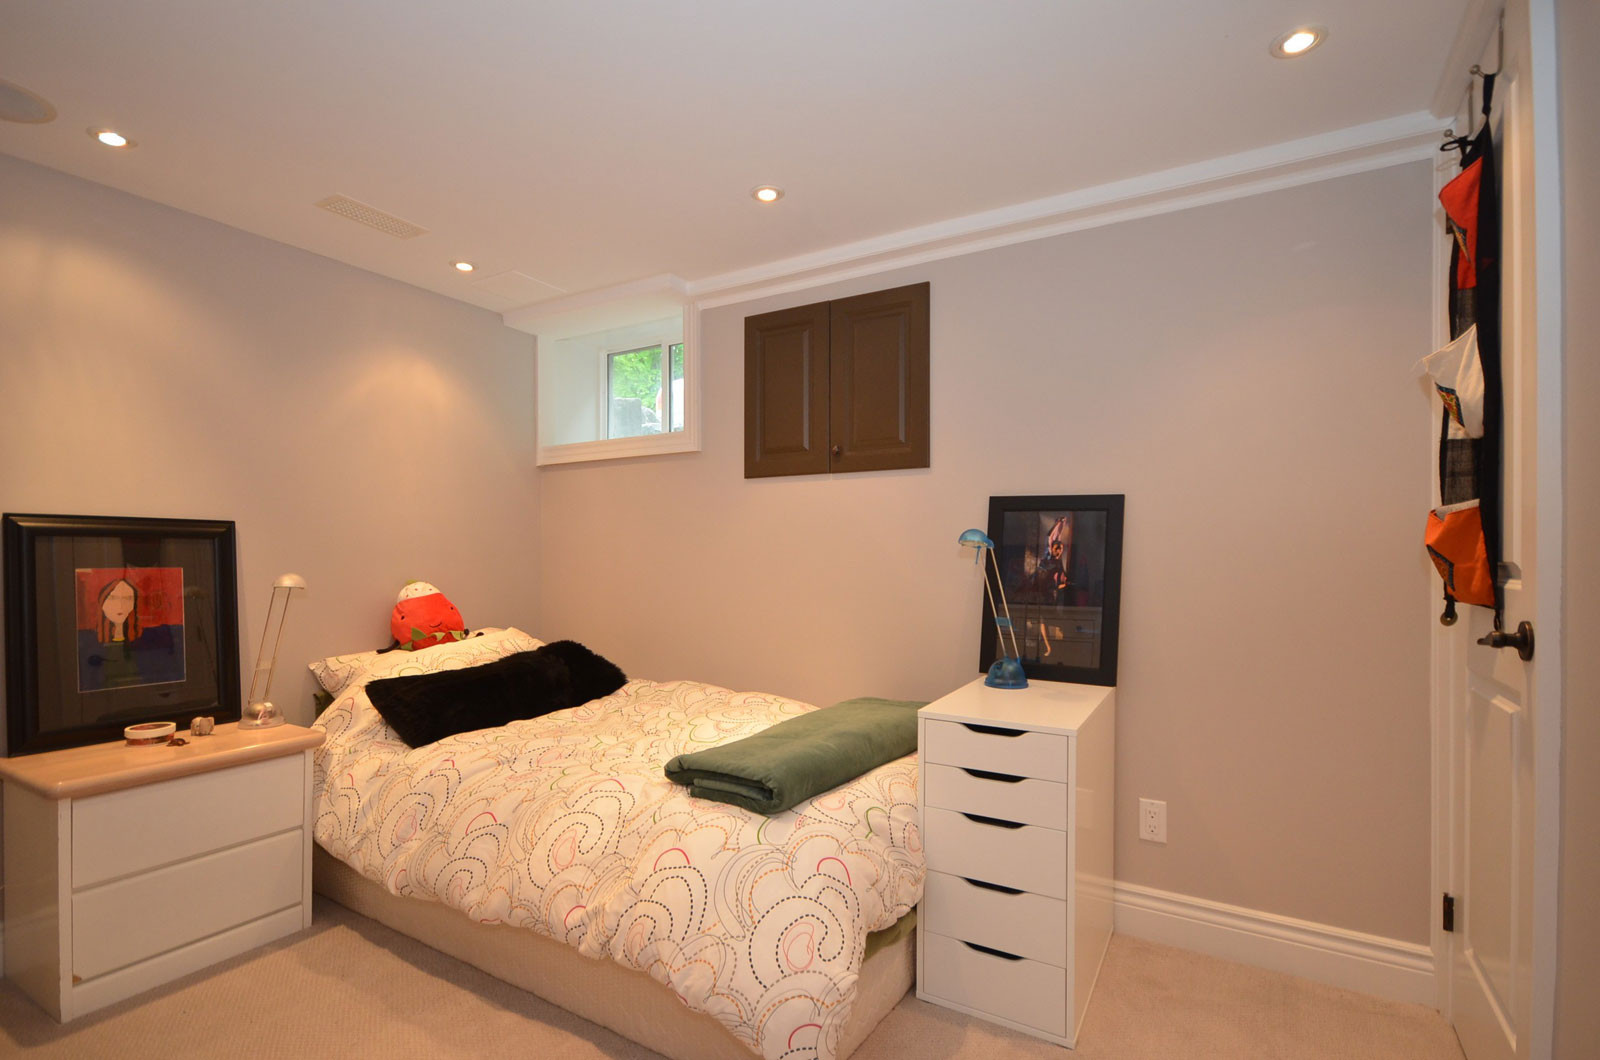 Small Basement Bedroom Ideas
 Basement Bedroom Ideas for Minimalist Home Amaza Design